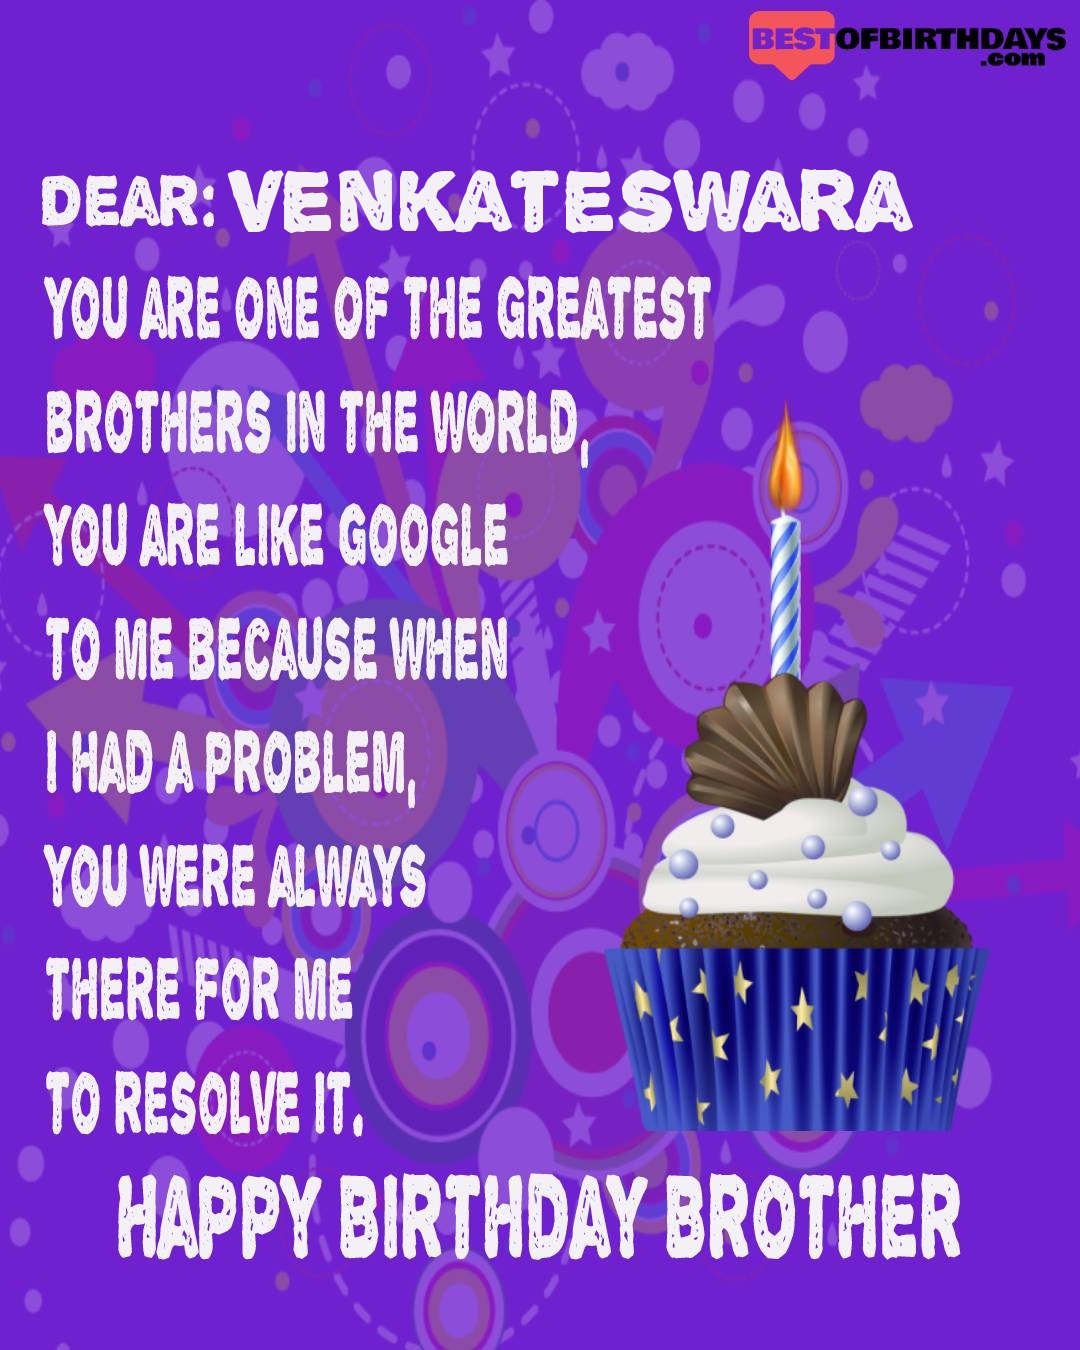 Happy birthday venkateswara bhai brother bro